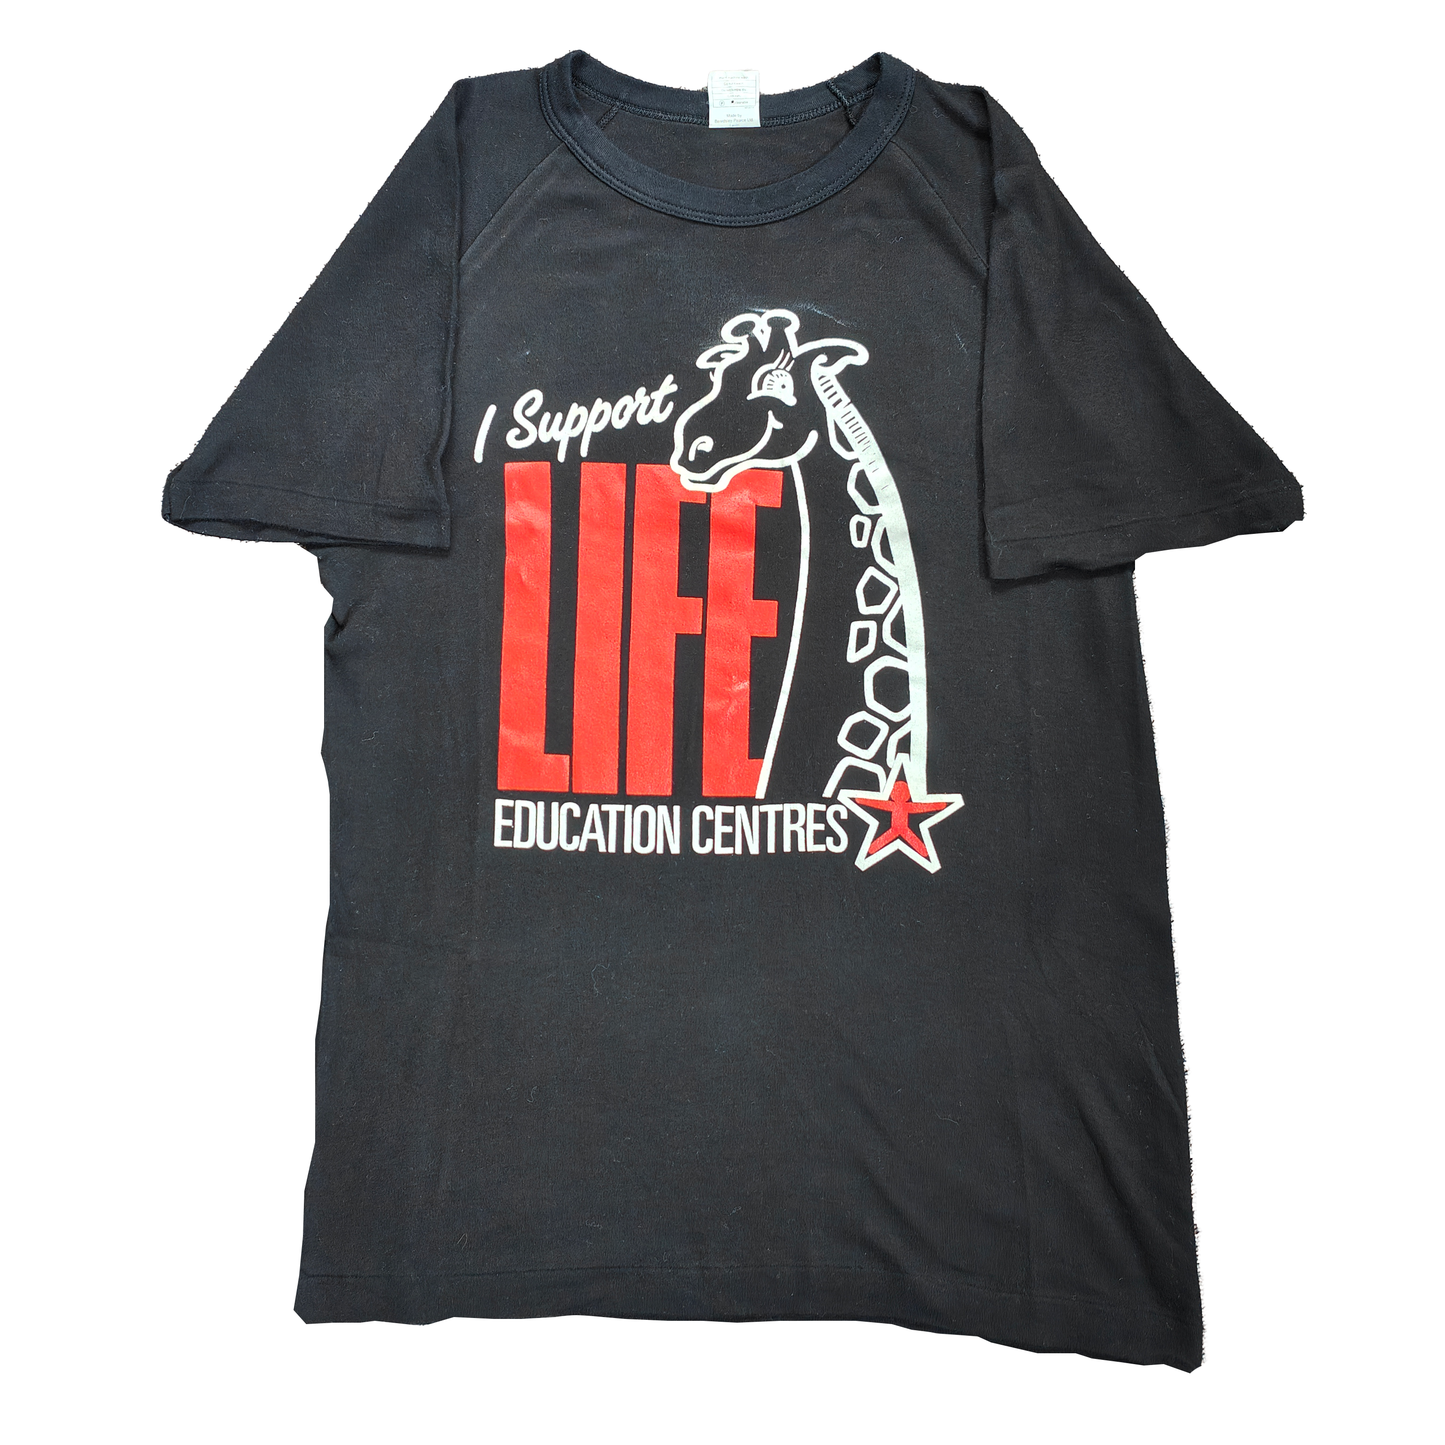 Harold the Giraffe "Life" T Shirt - MEDIUM